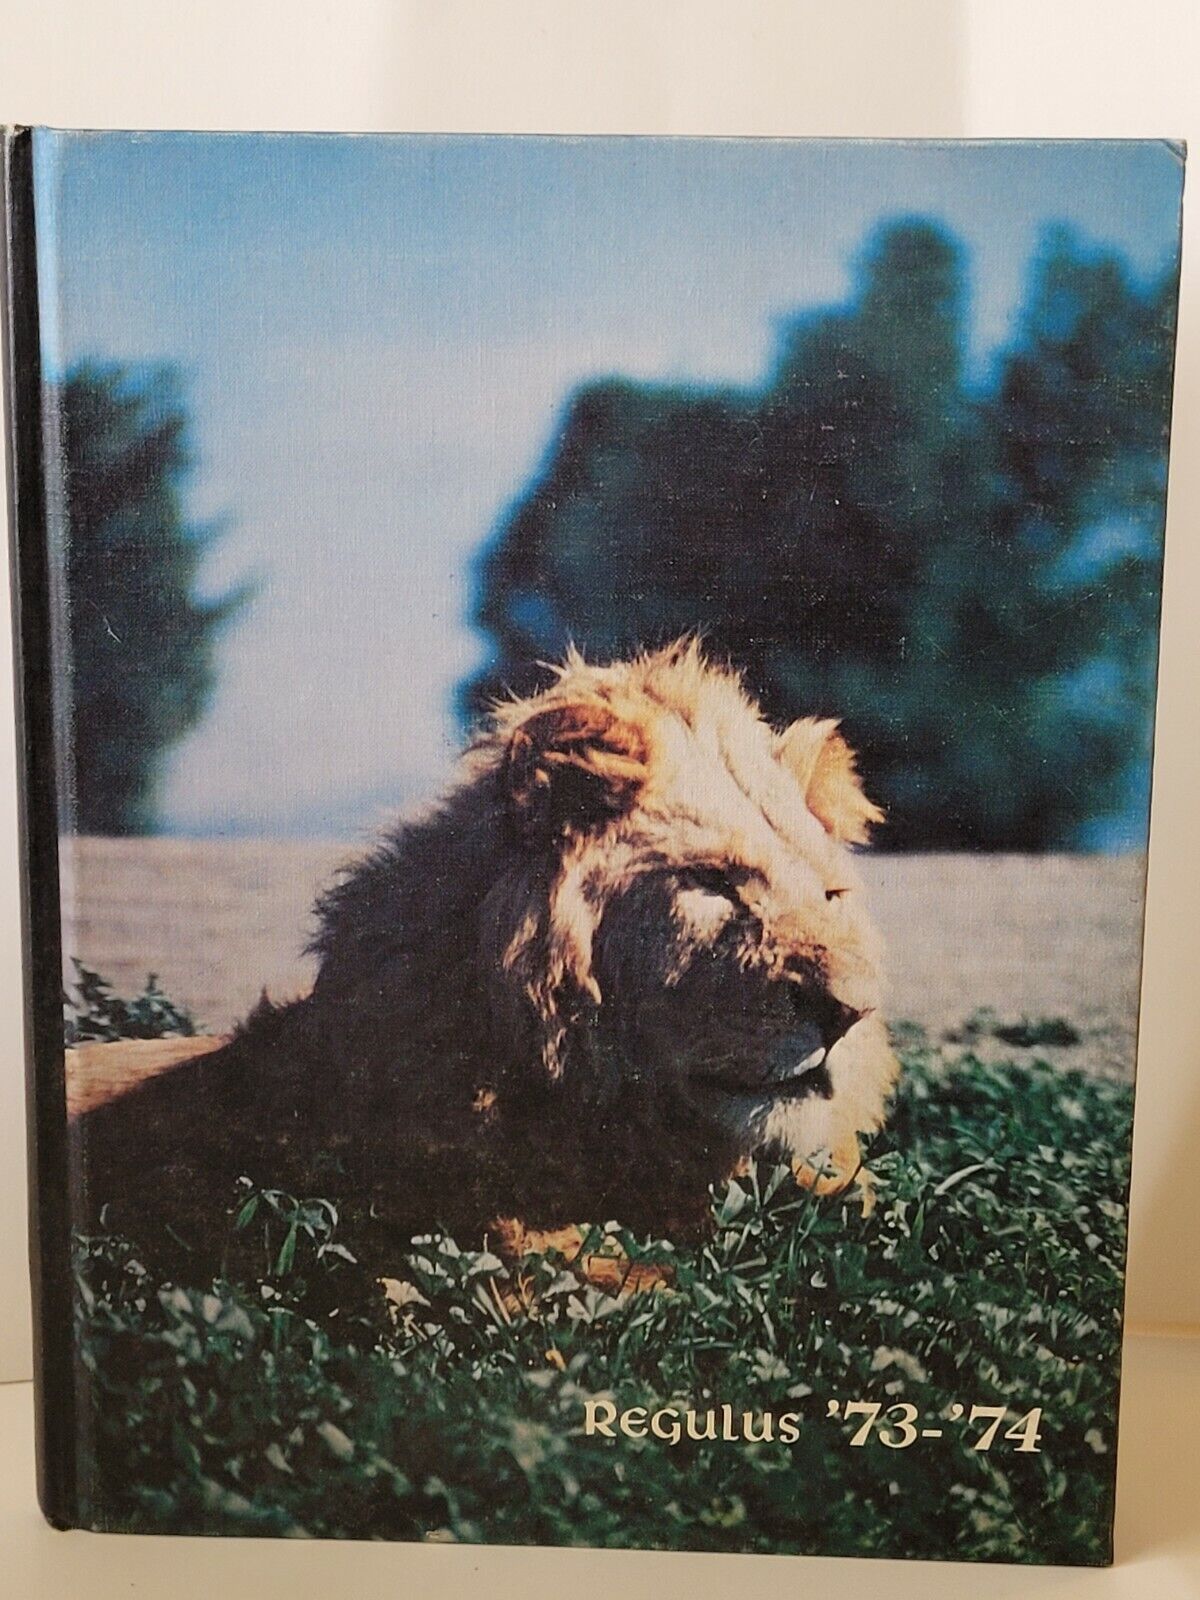 Cypress, California Lexington Junior High School Yearbook Annual 1973-74 Regulus